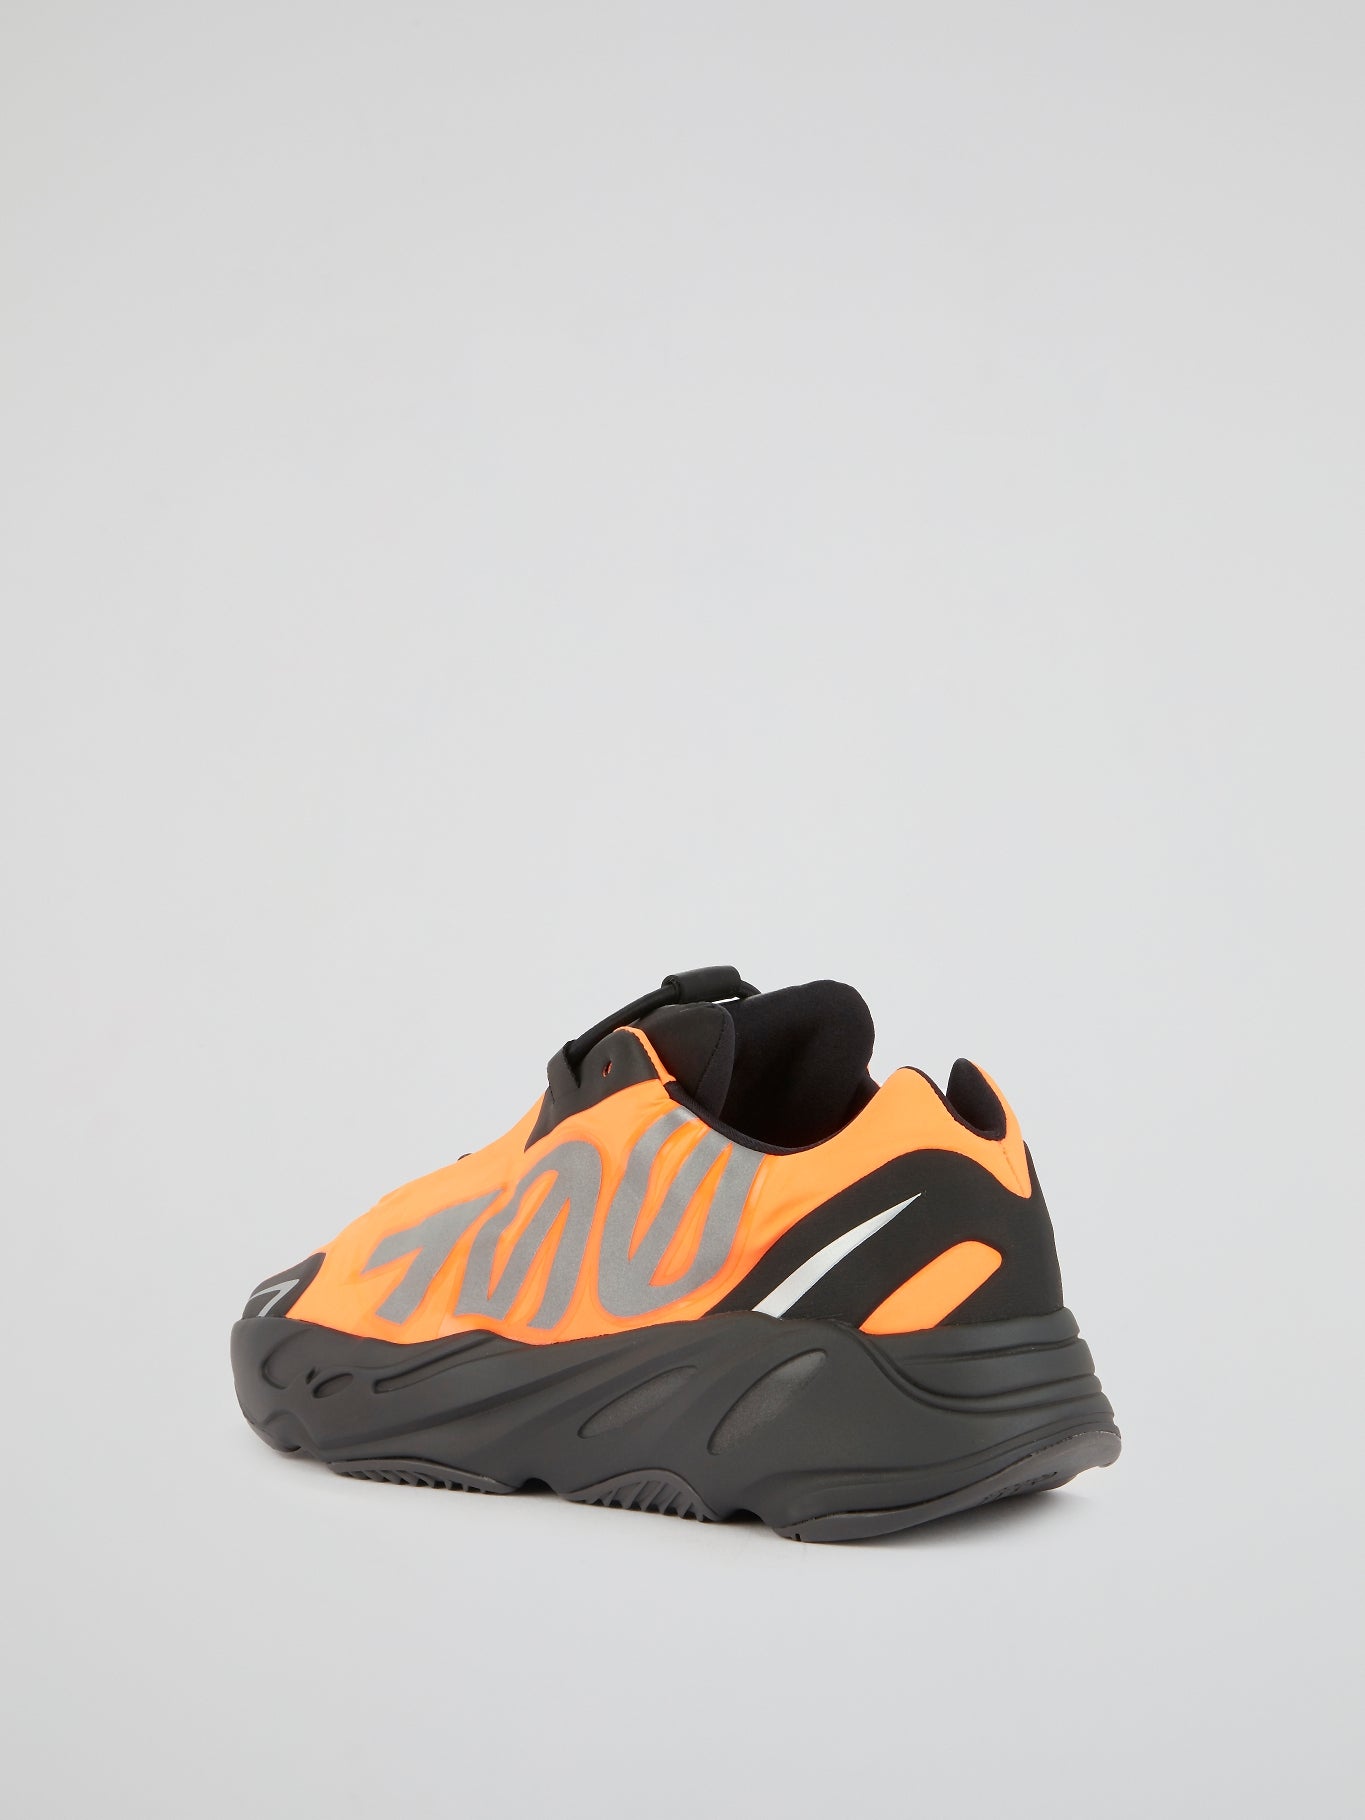 Yeezy Boost 700 MNVN Sneakers - Size 9